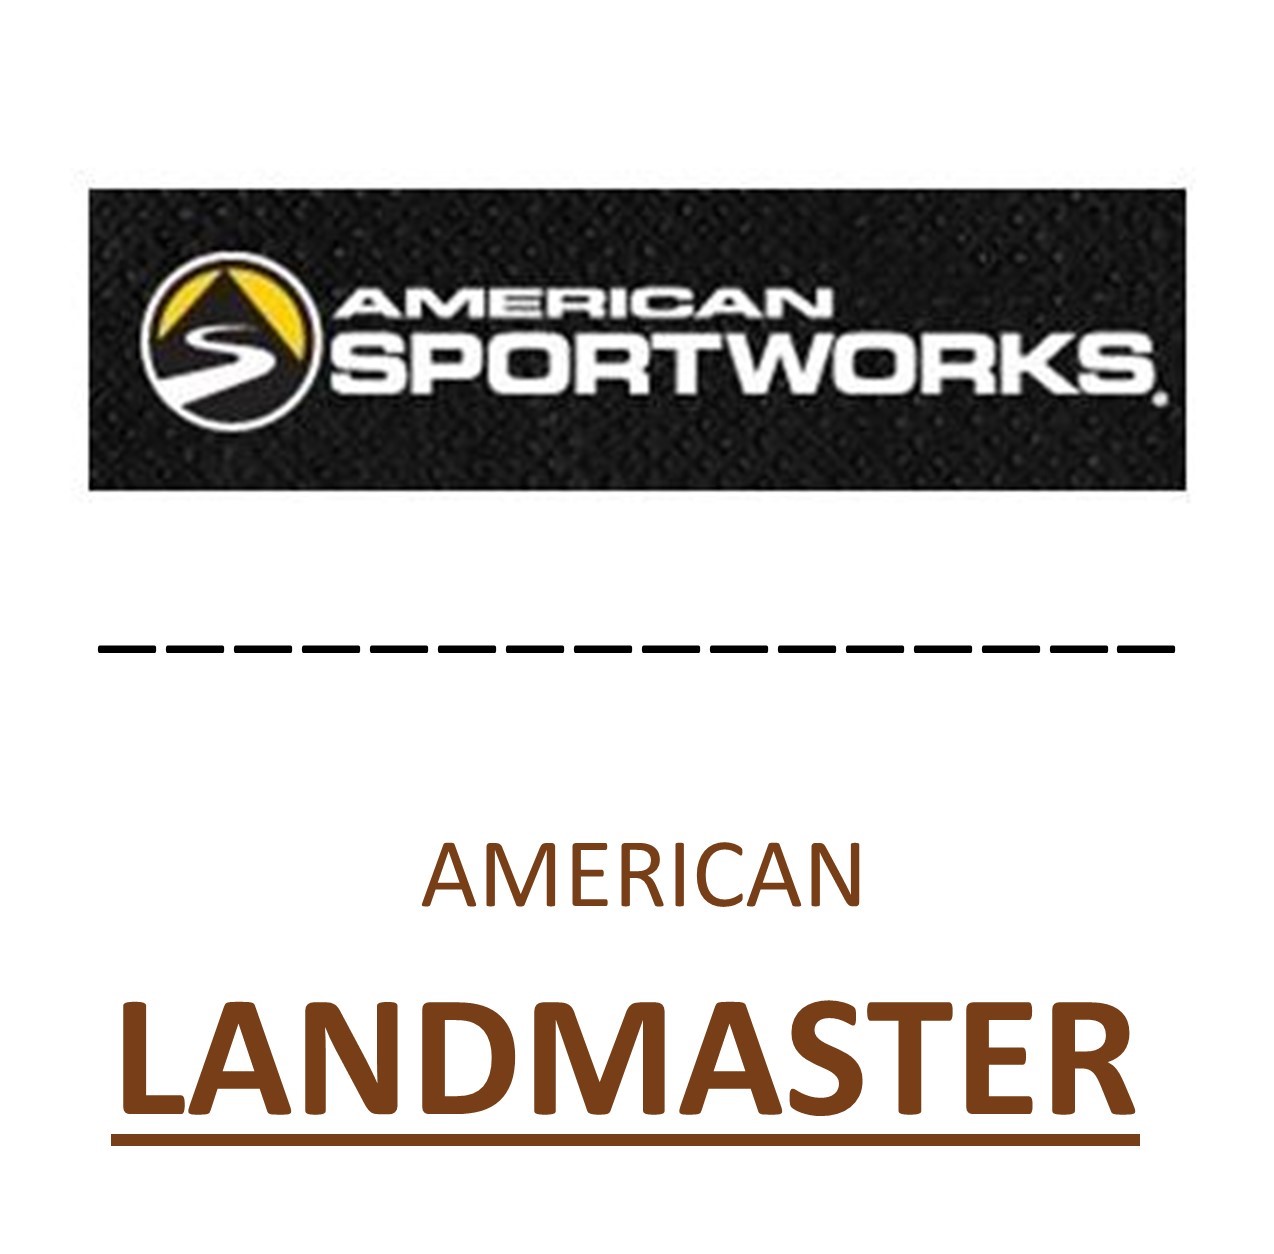 American Sportworks American Landmaster